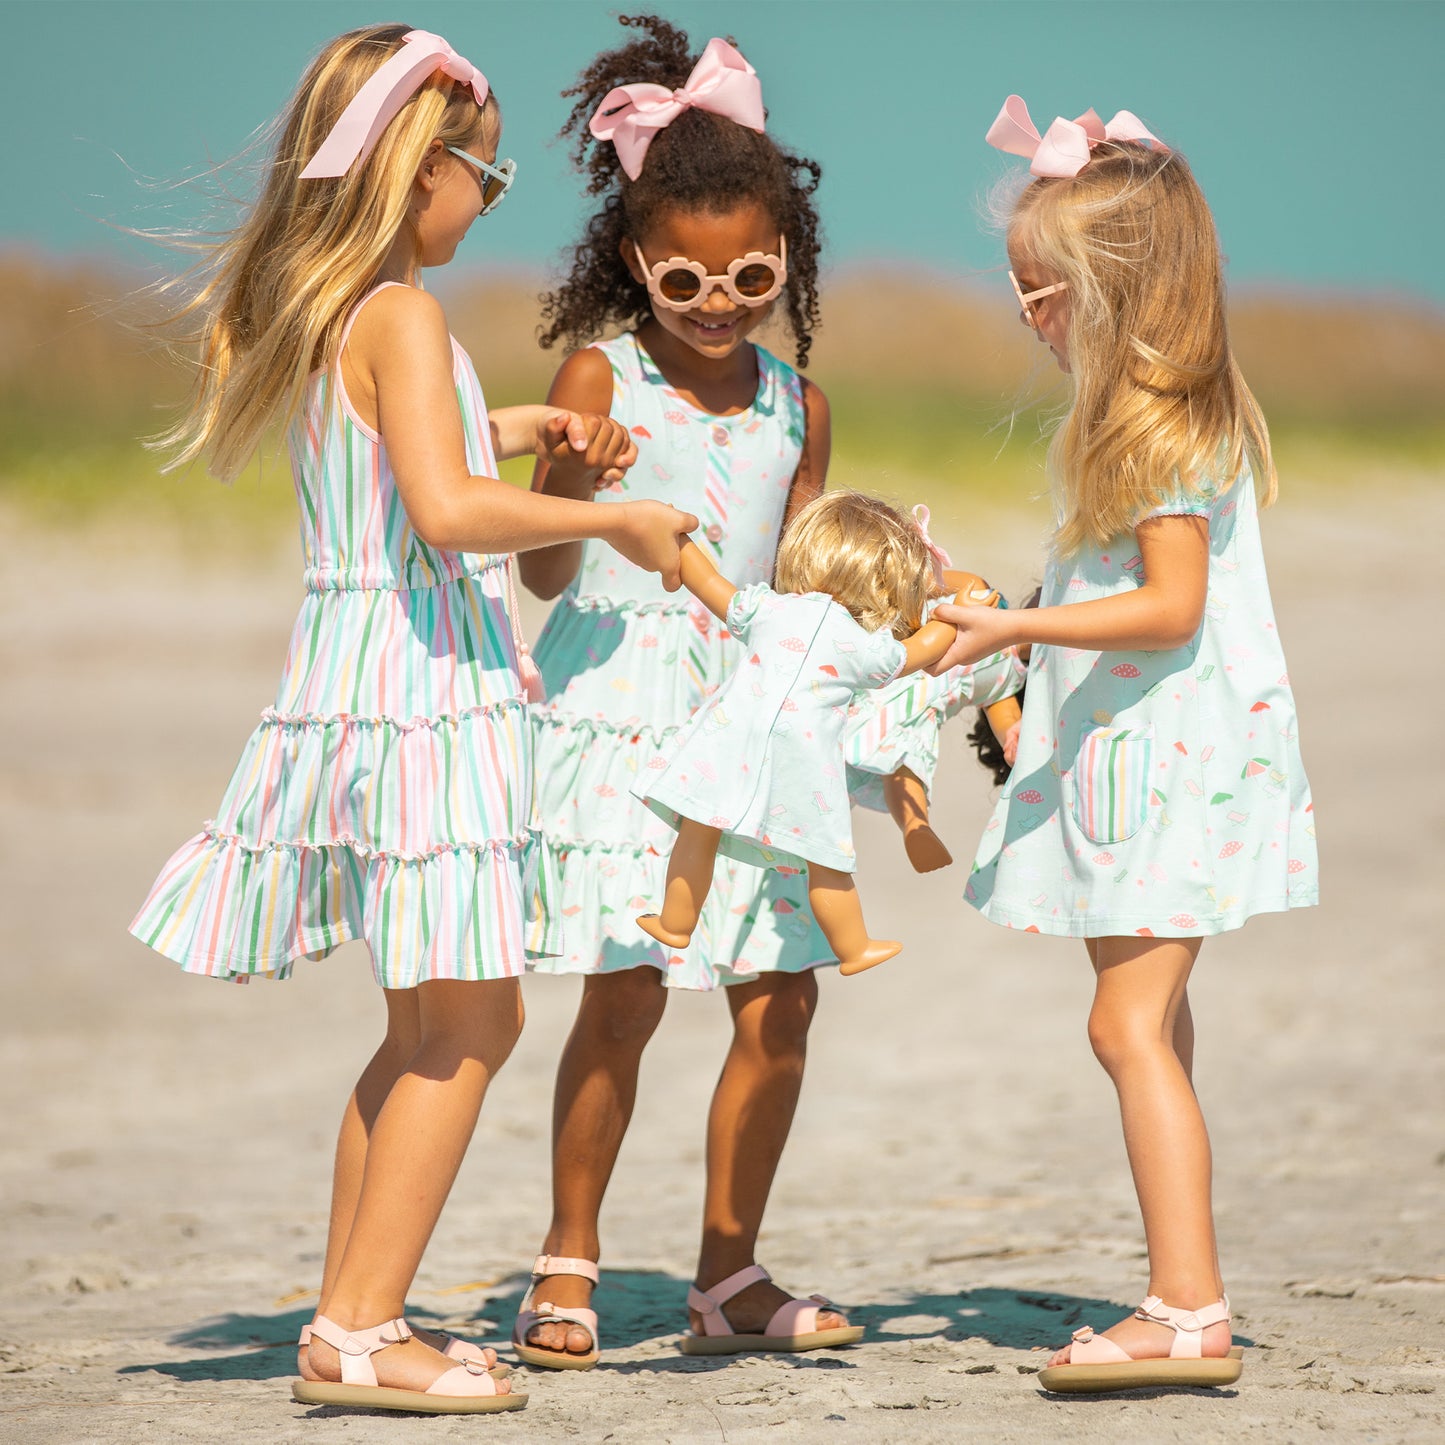 three little girls playing on the beach